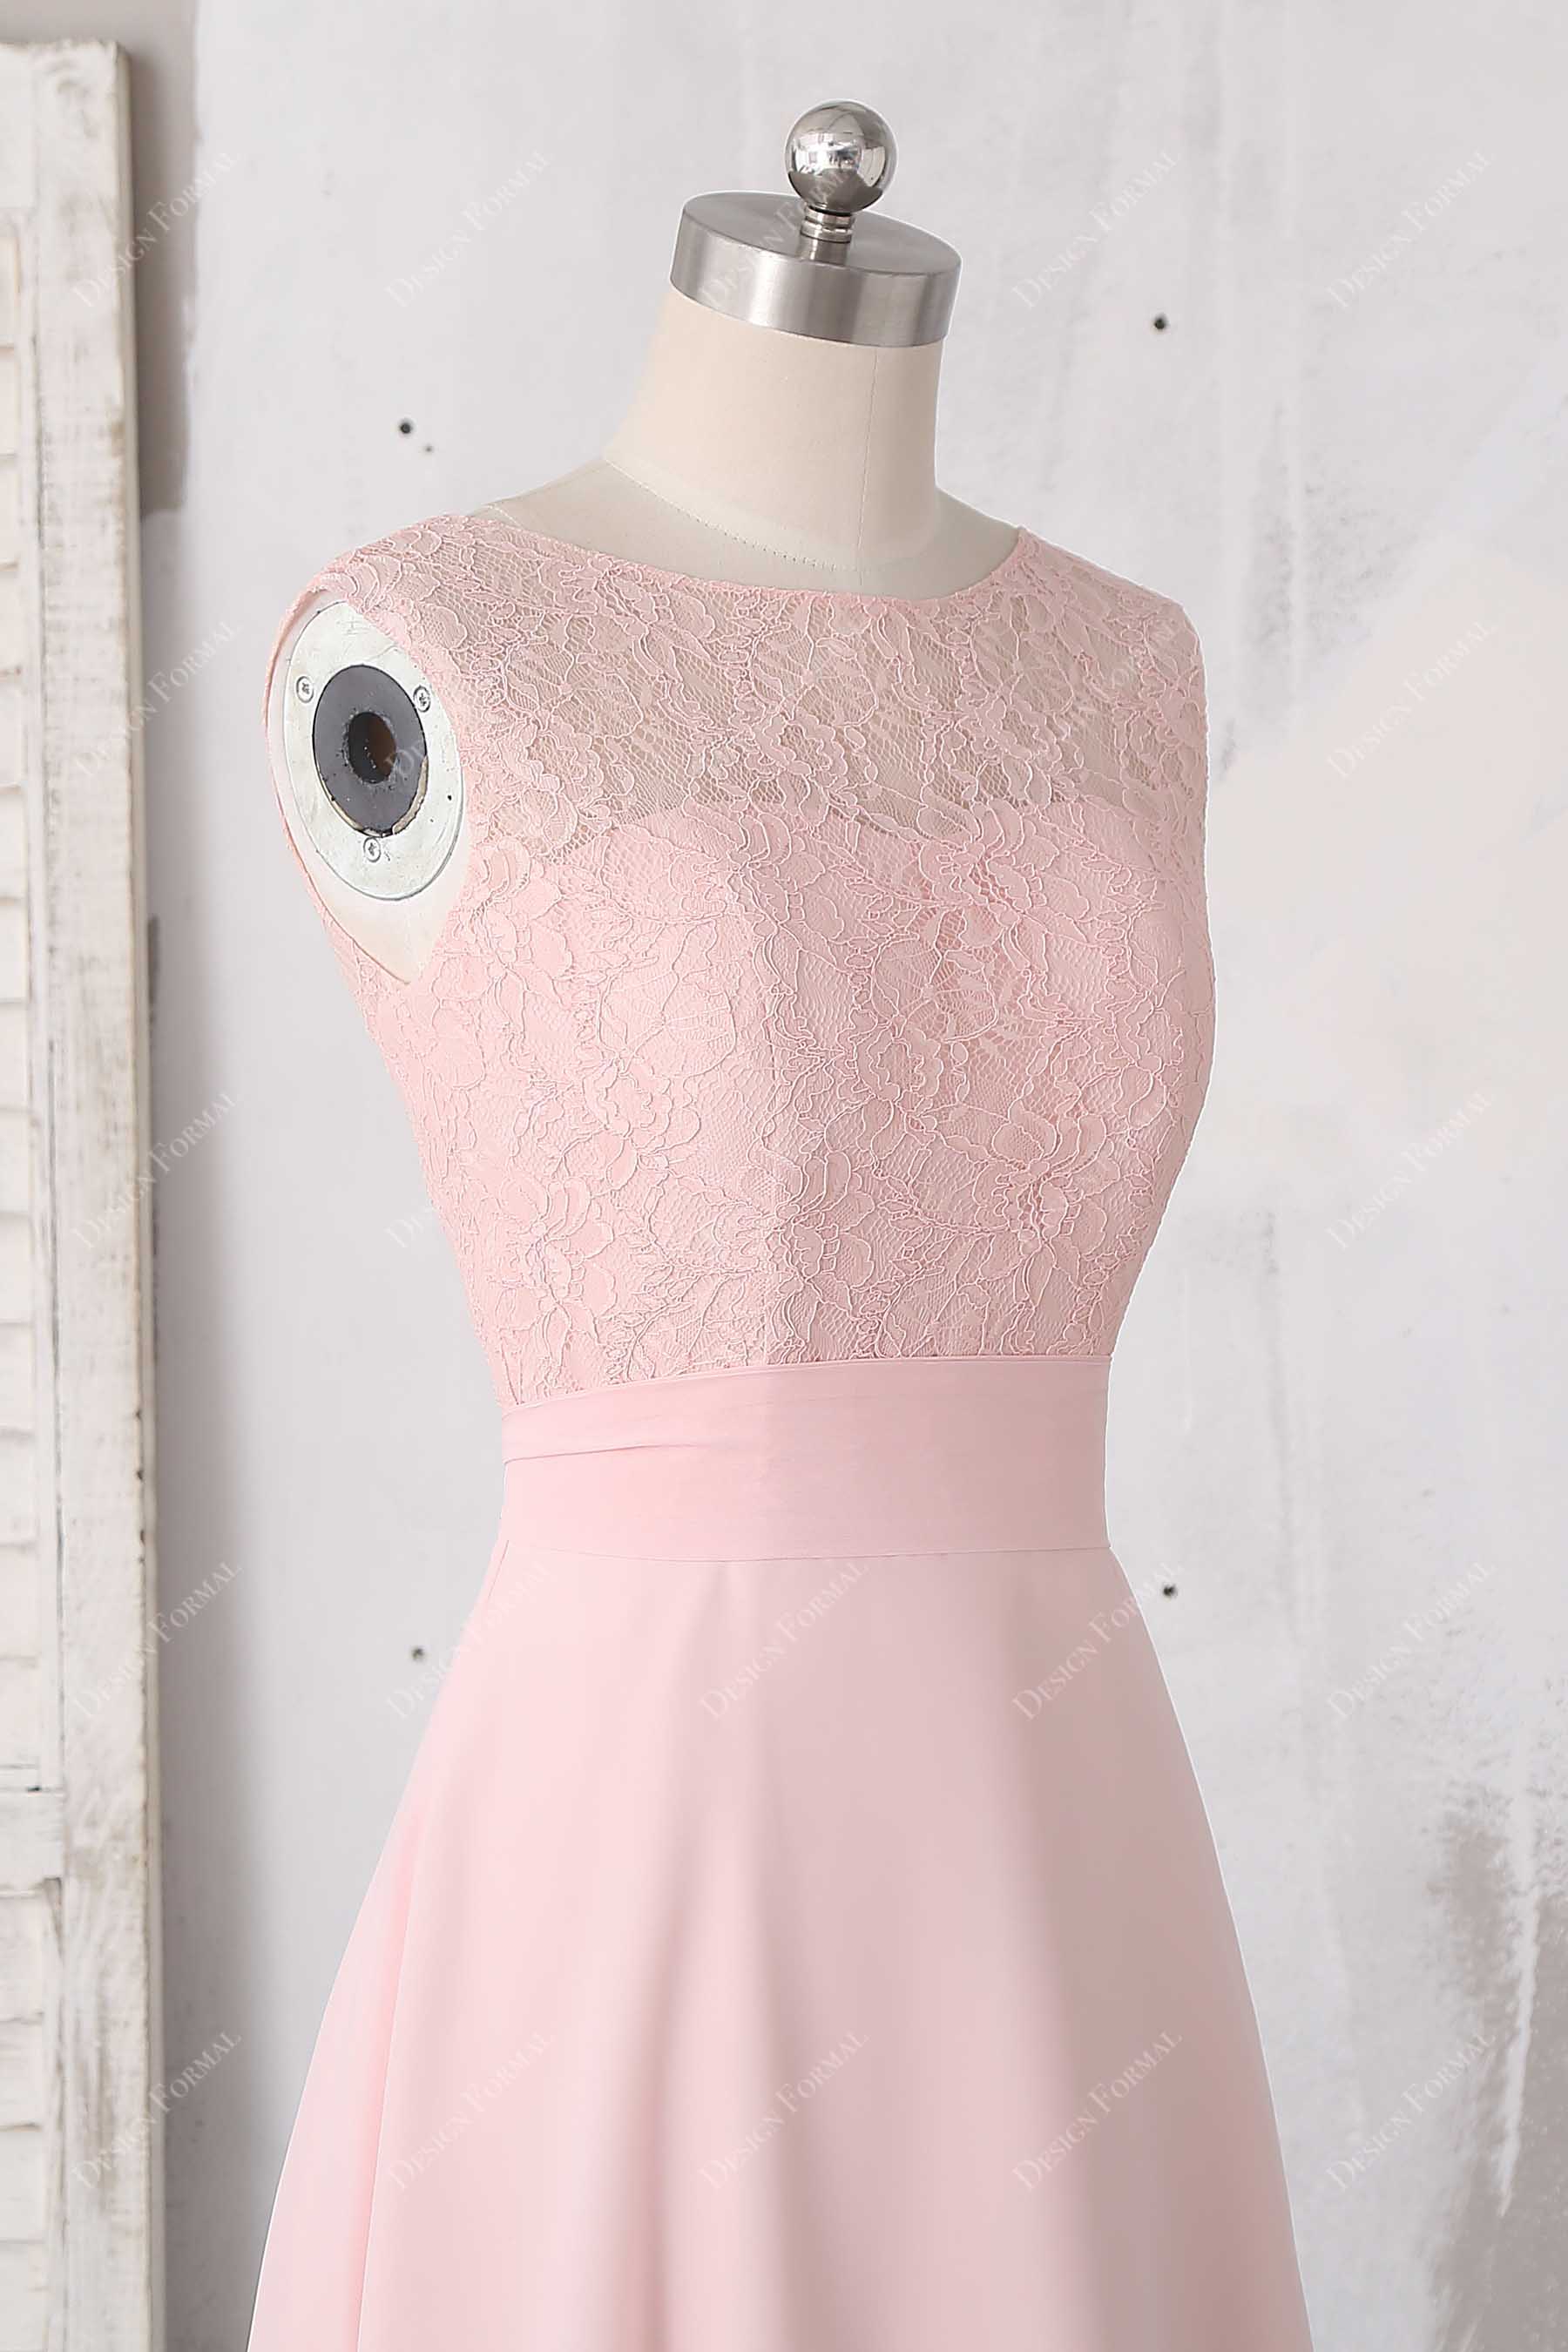 sleeveless pink lace dress with illusion bodice